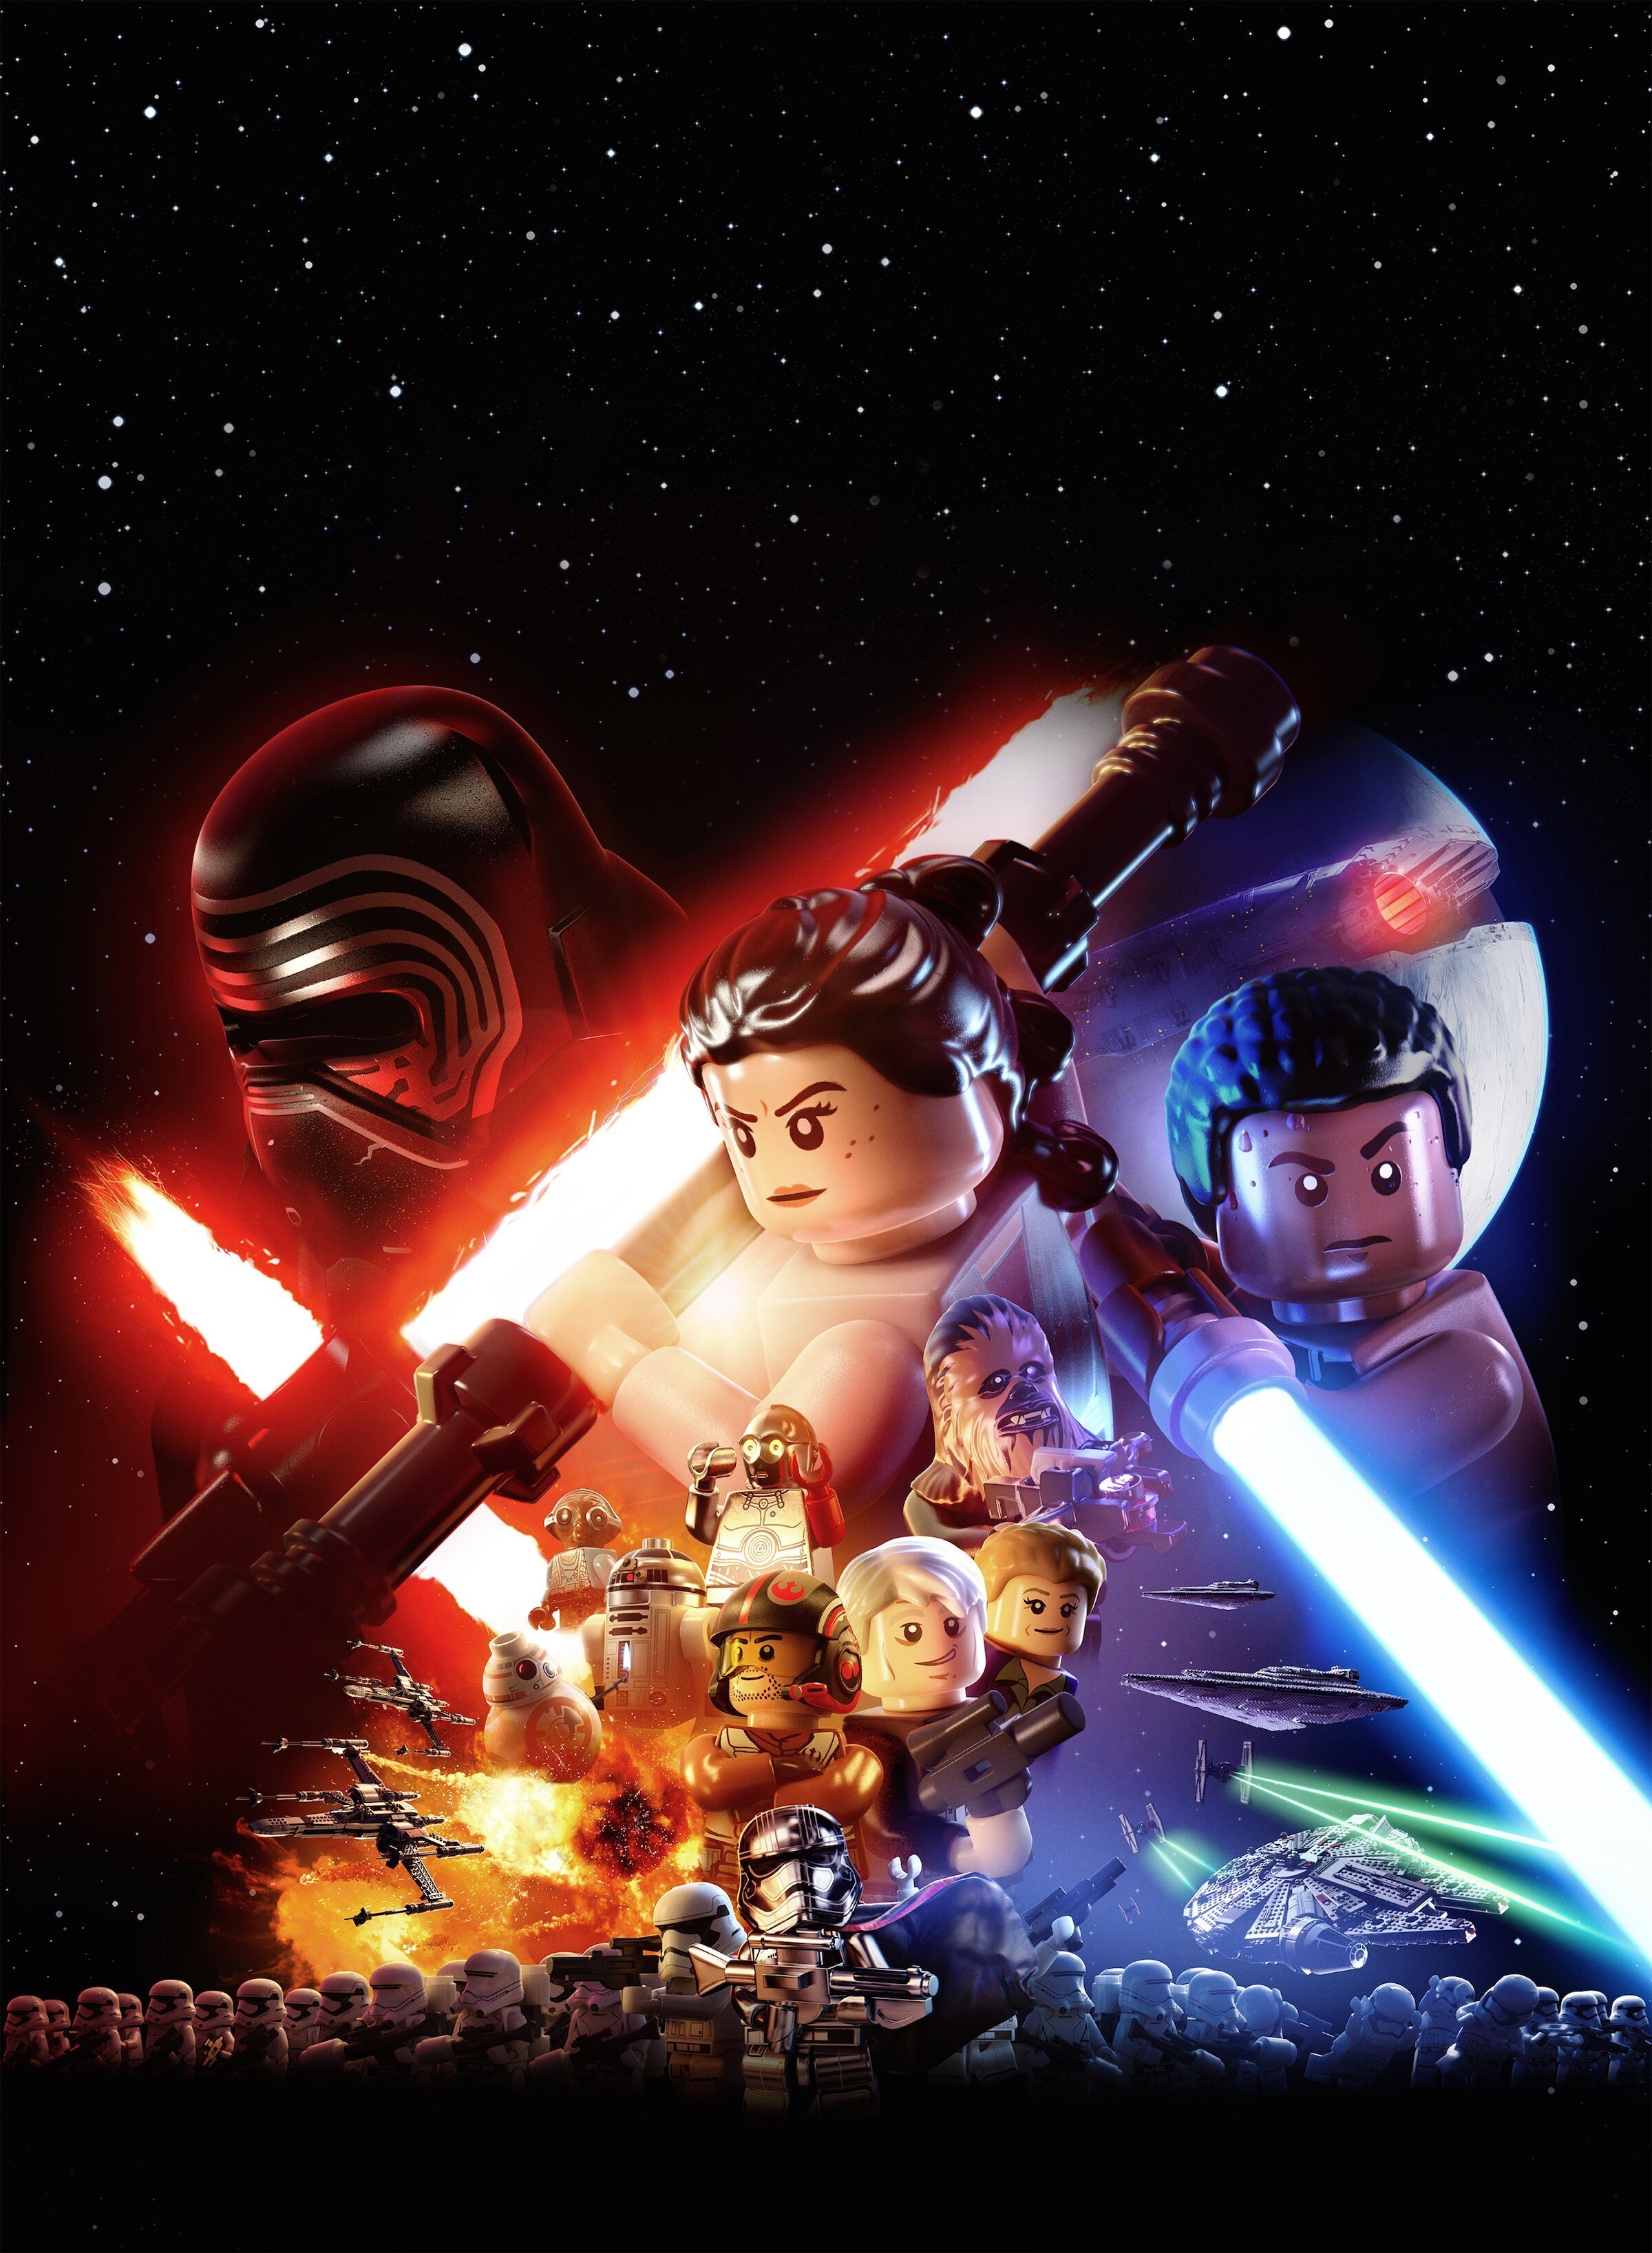 LEGO Star Wars: The Force Awakens key art